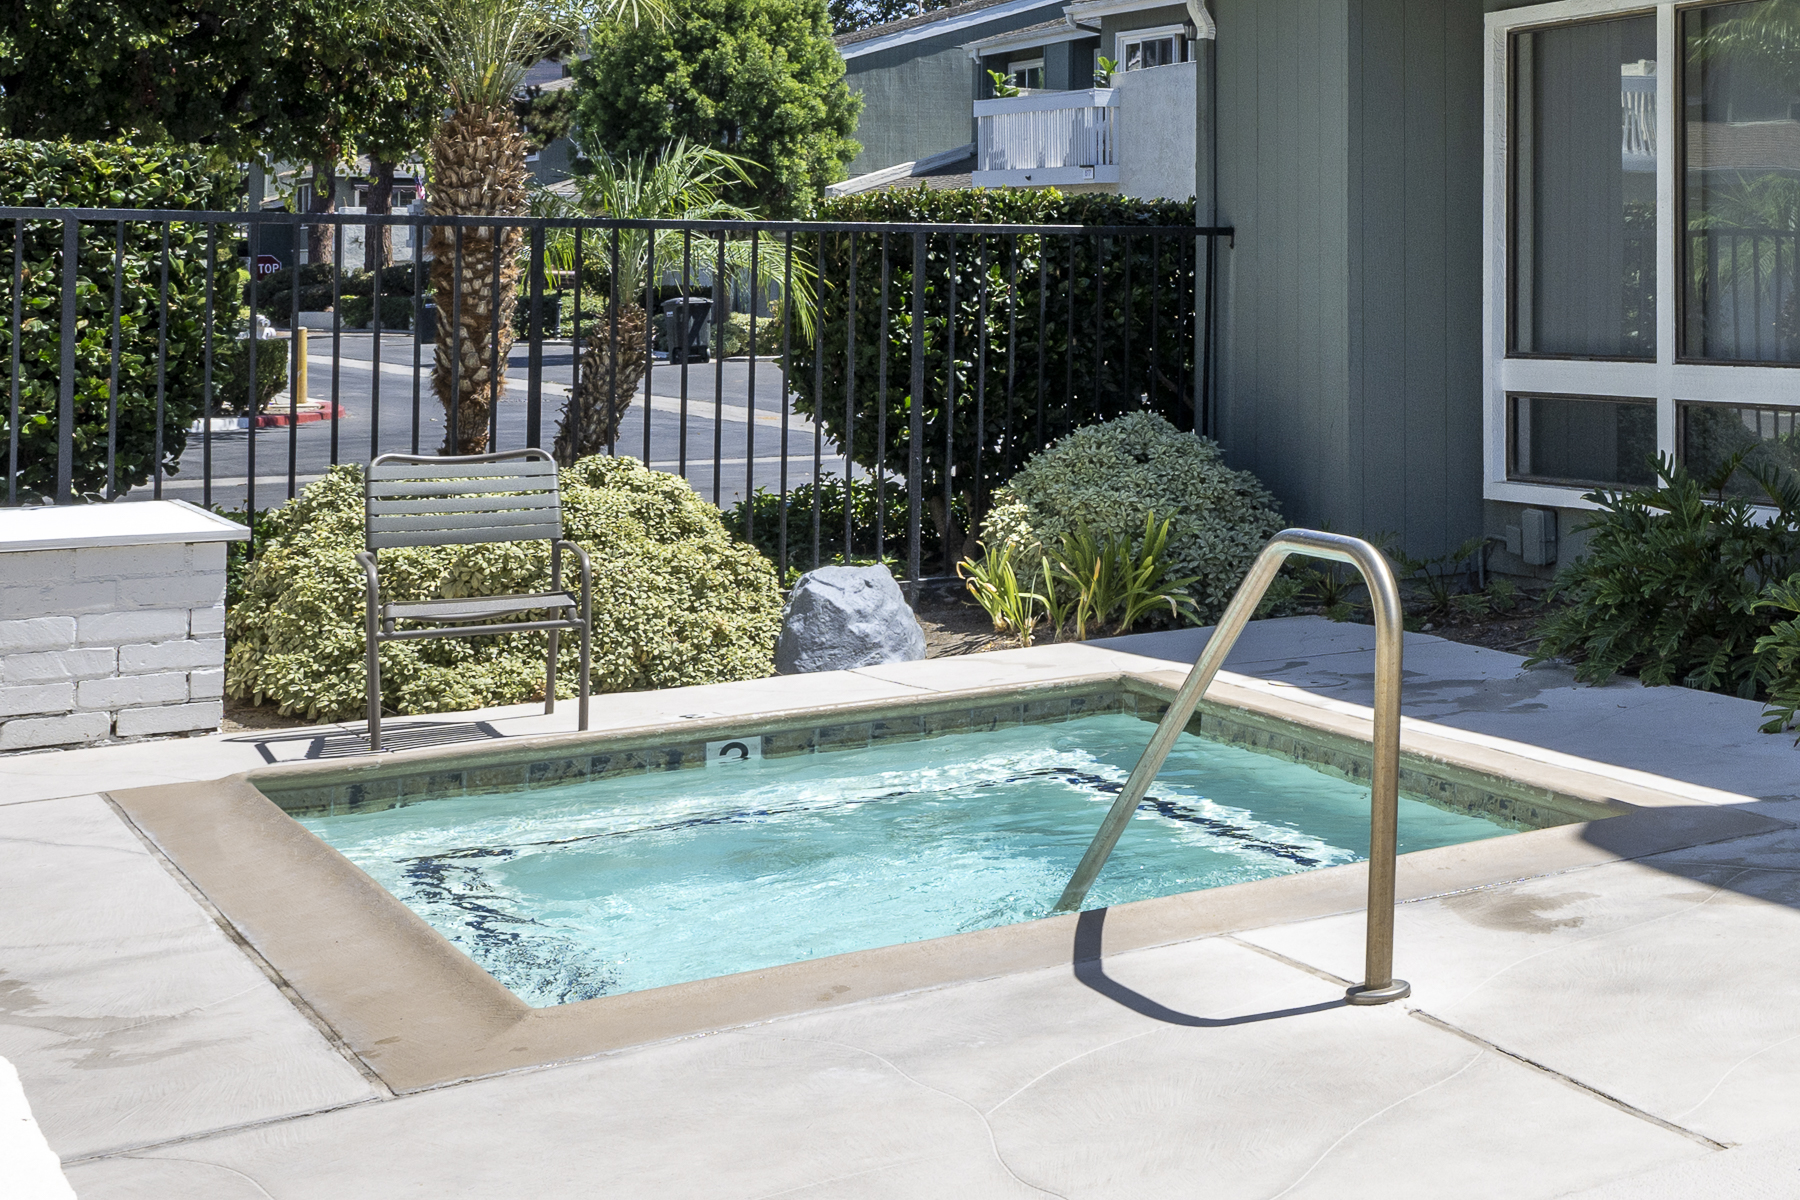 3424 Pinebrook Costa Mesa CA 92626: Hot tub by pool house.